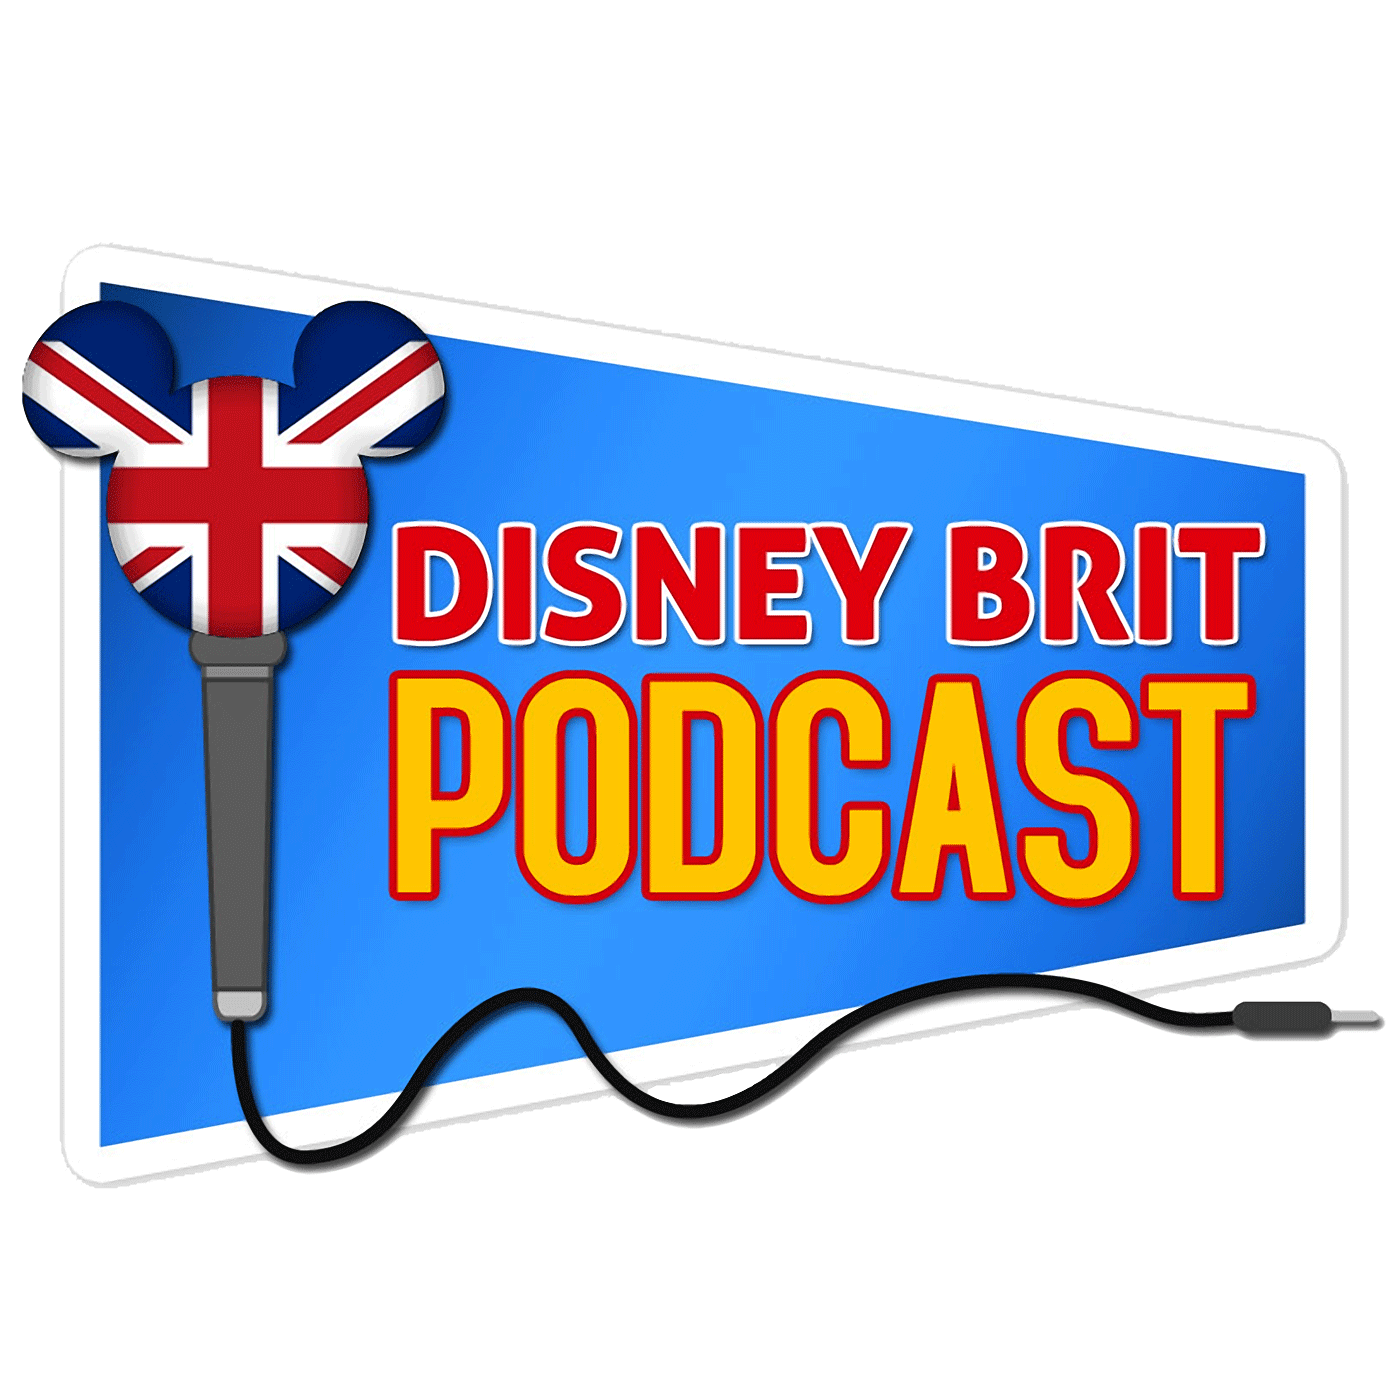 DisneyBrit Podcast - Show 165 - Alan’s Going Away